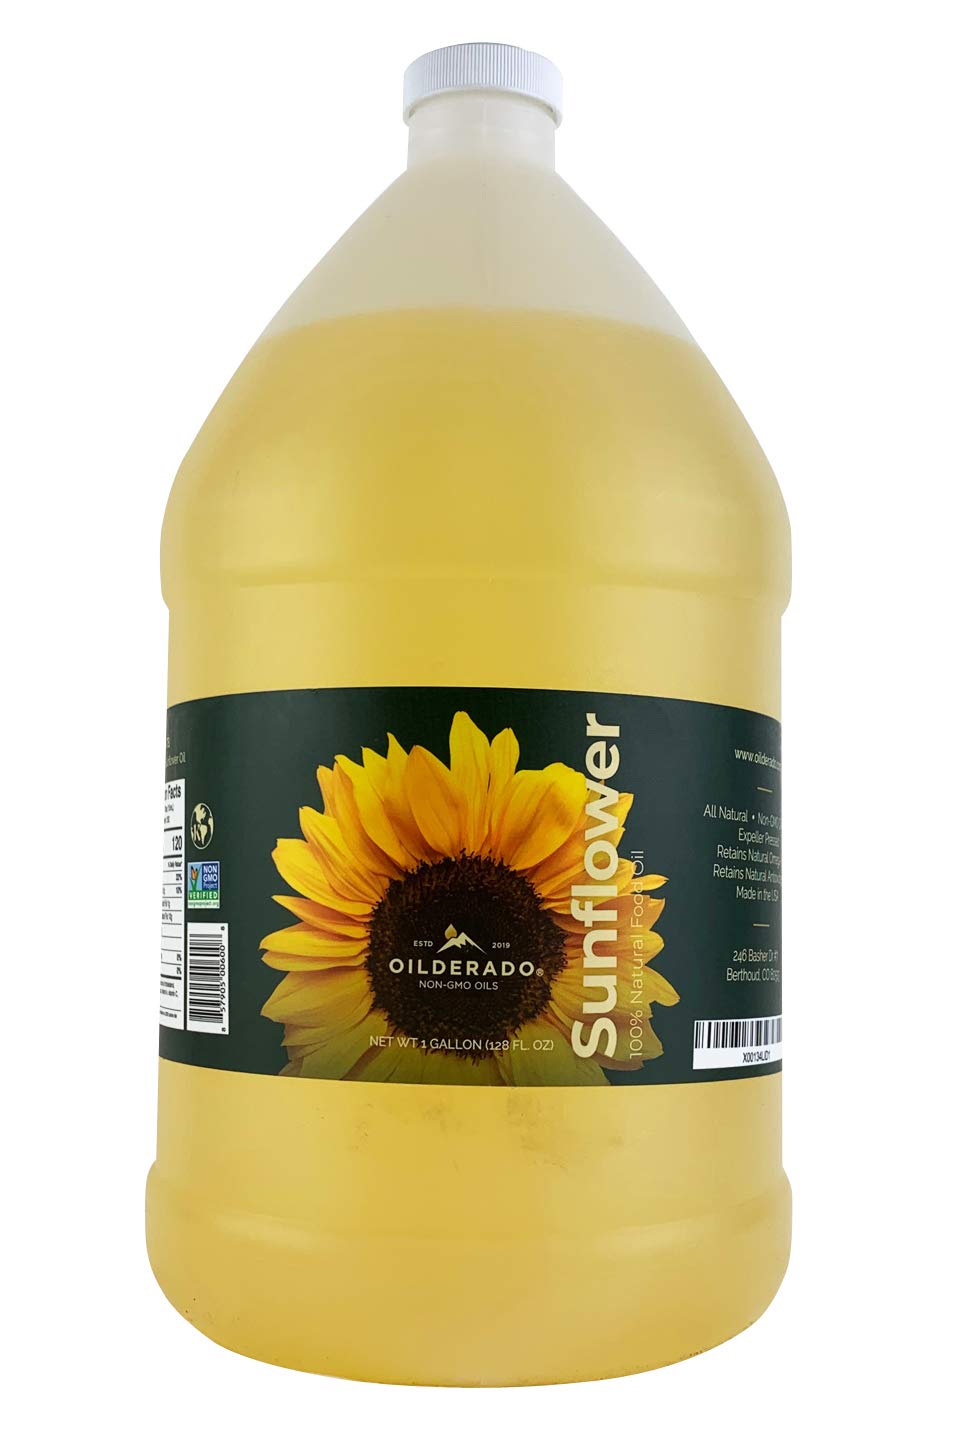 Oilderado Sunflower Oil